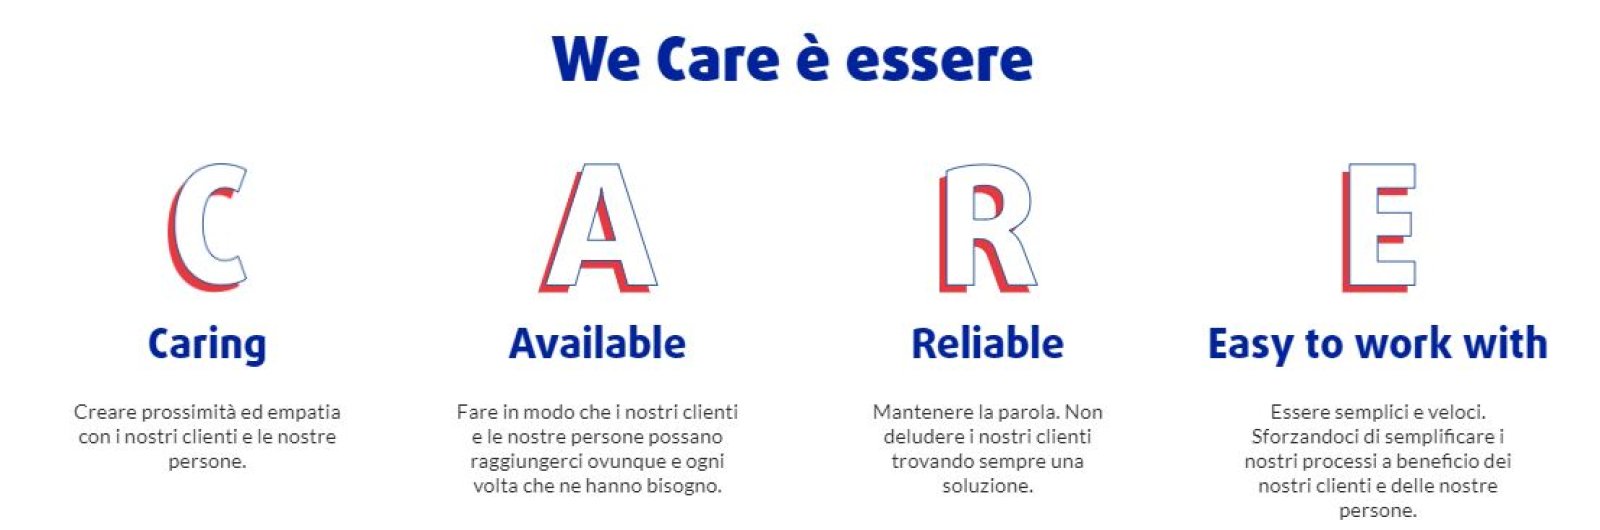 Logo Europ Assistance Italia S.p.A.